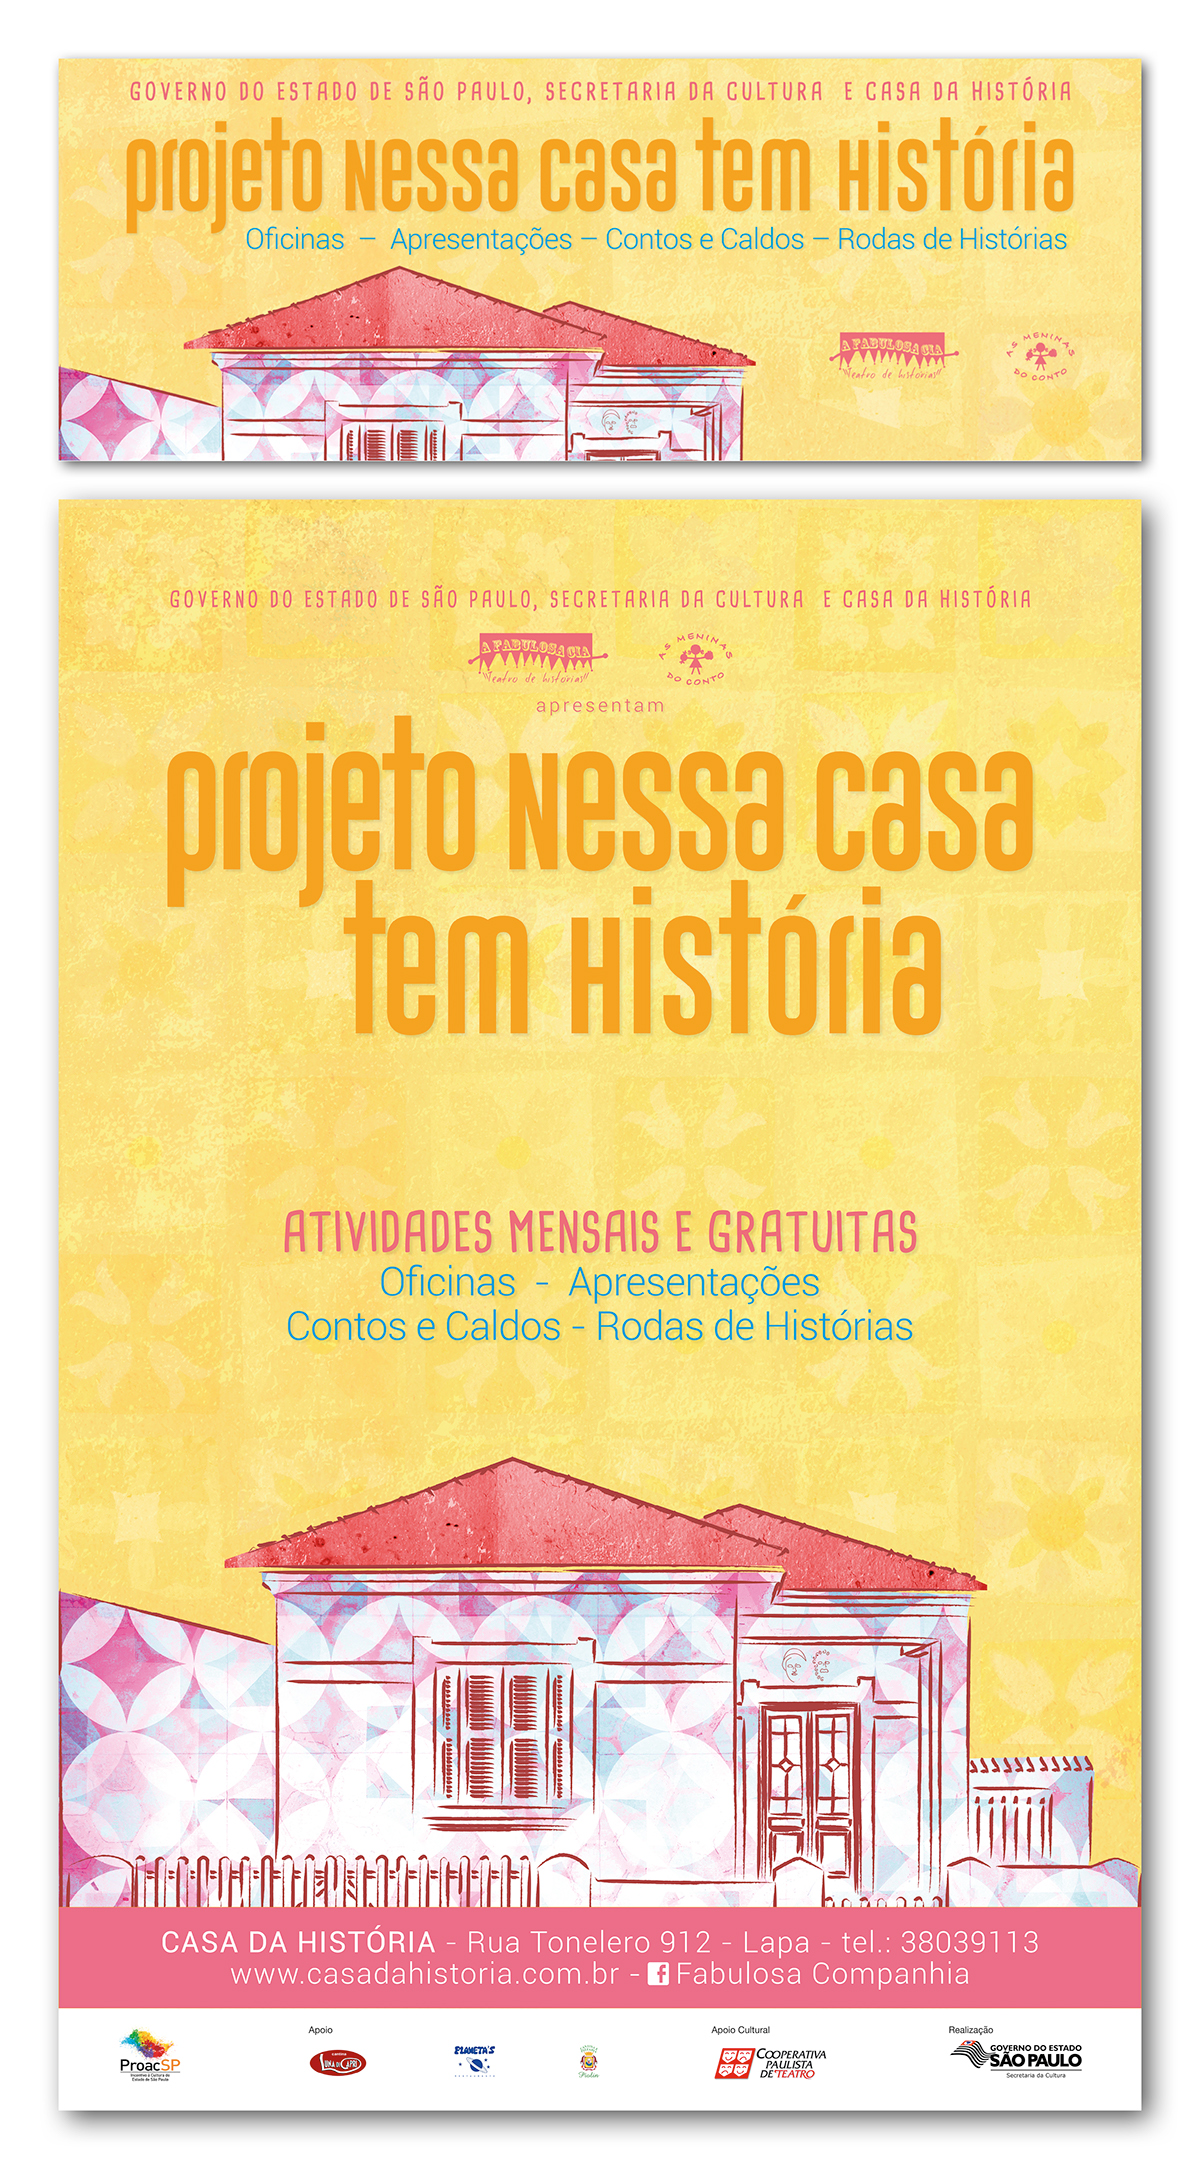 design editorial design gráfico Fábio Viana Meninas do Conto São Paulo Brasil